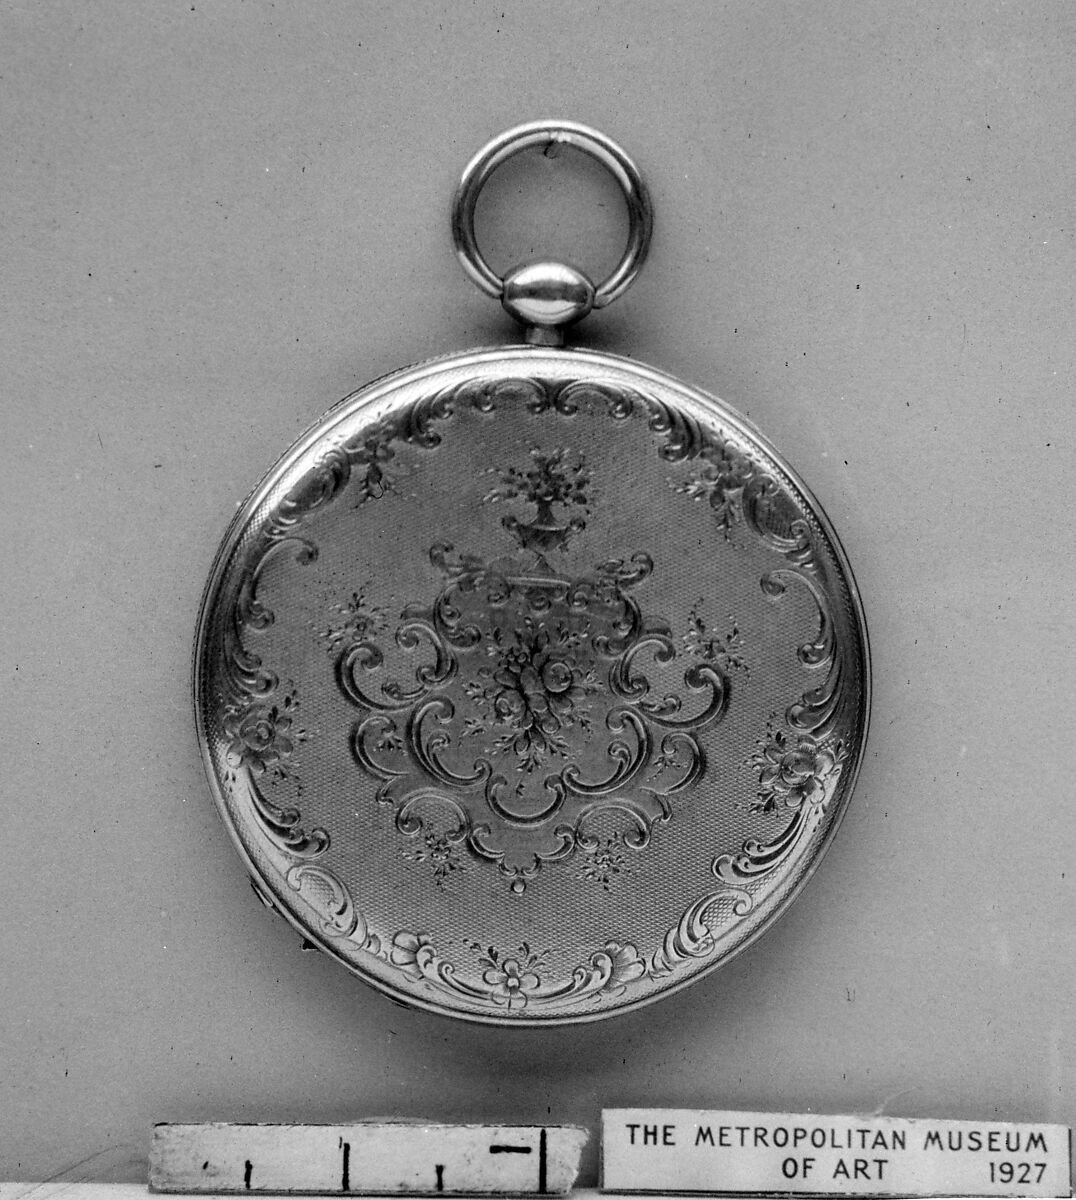 Watch, Watchmaker: Mermod Frères (Swiss, active late 19th century), Gold, enamel, jewels, Swiss, Geneva or Sainte-Croix 